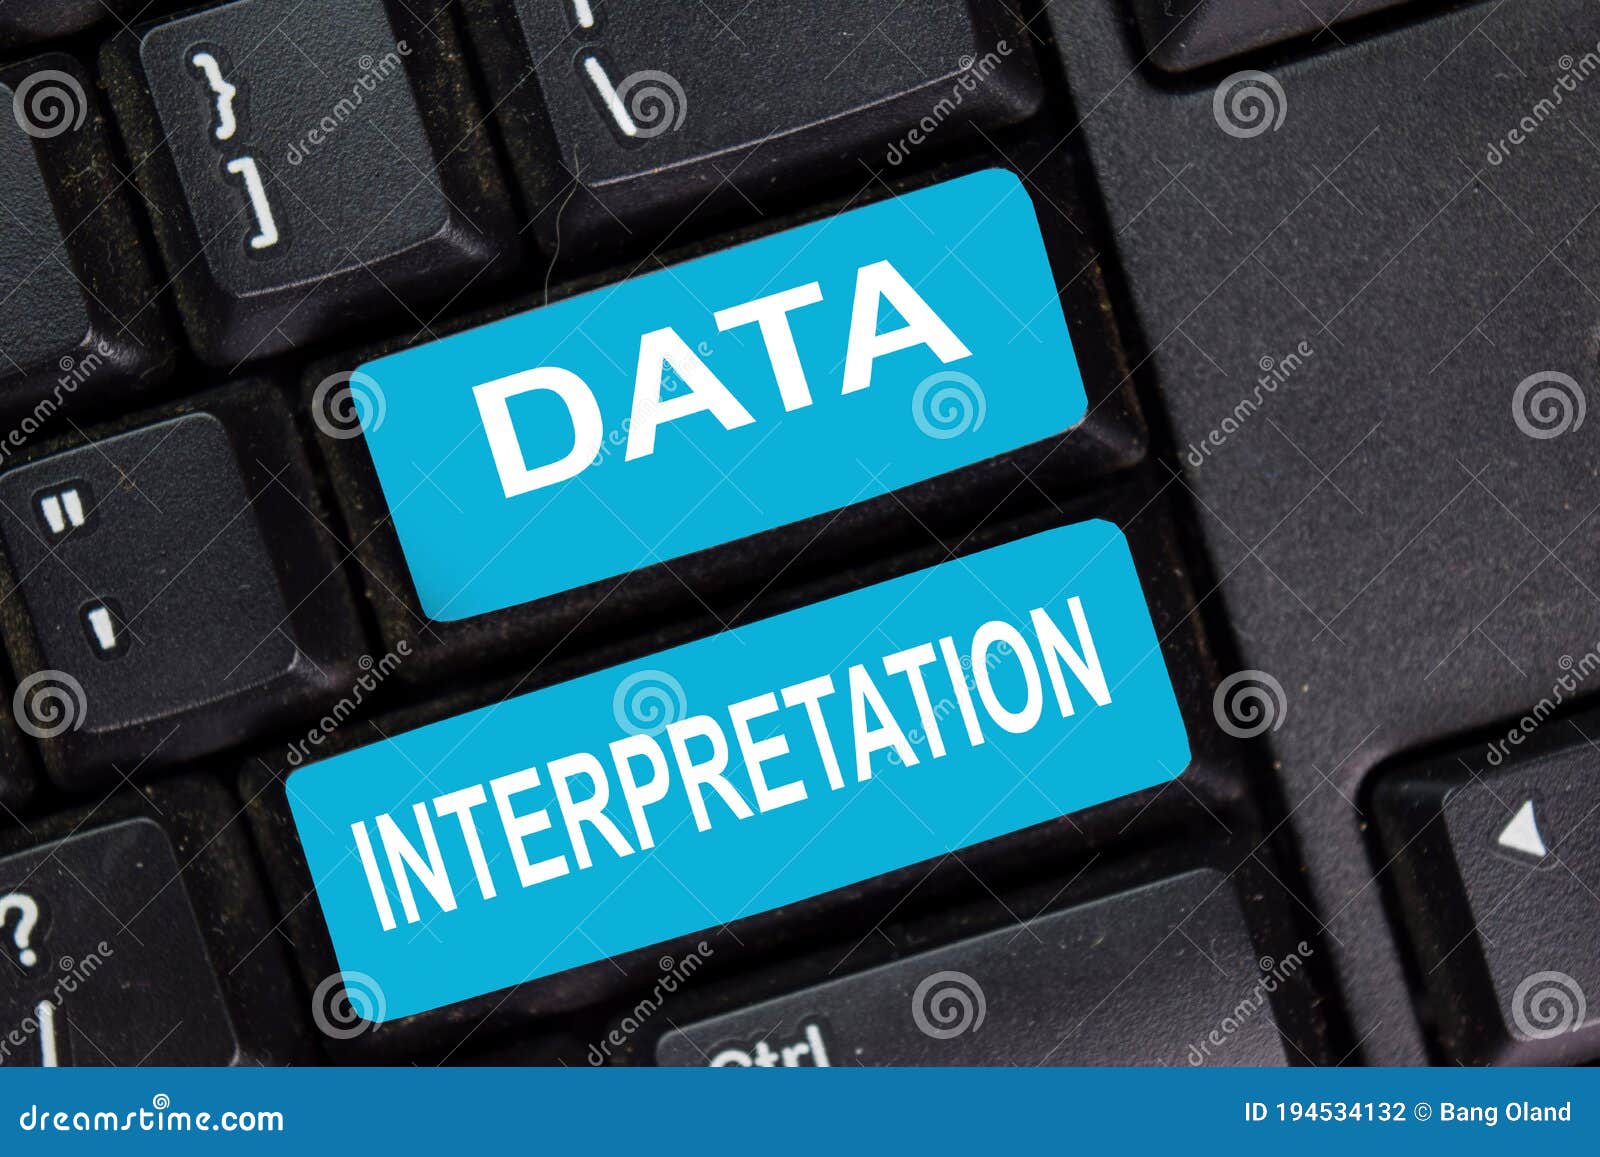 data interpretation on keyboard  on laptop background